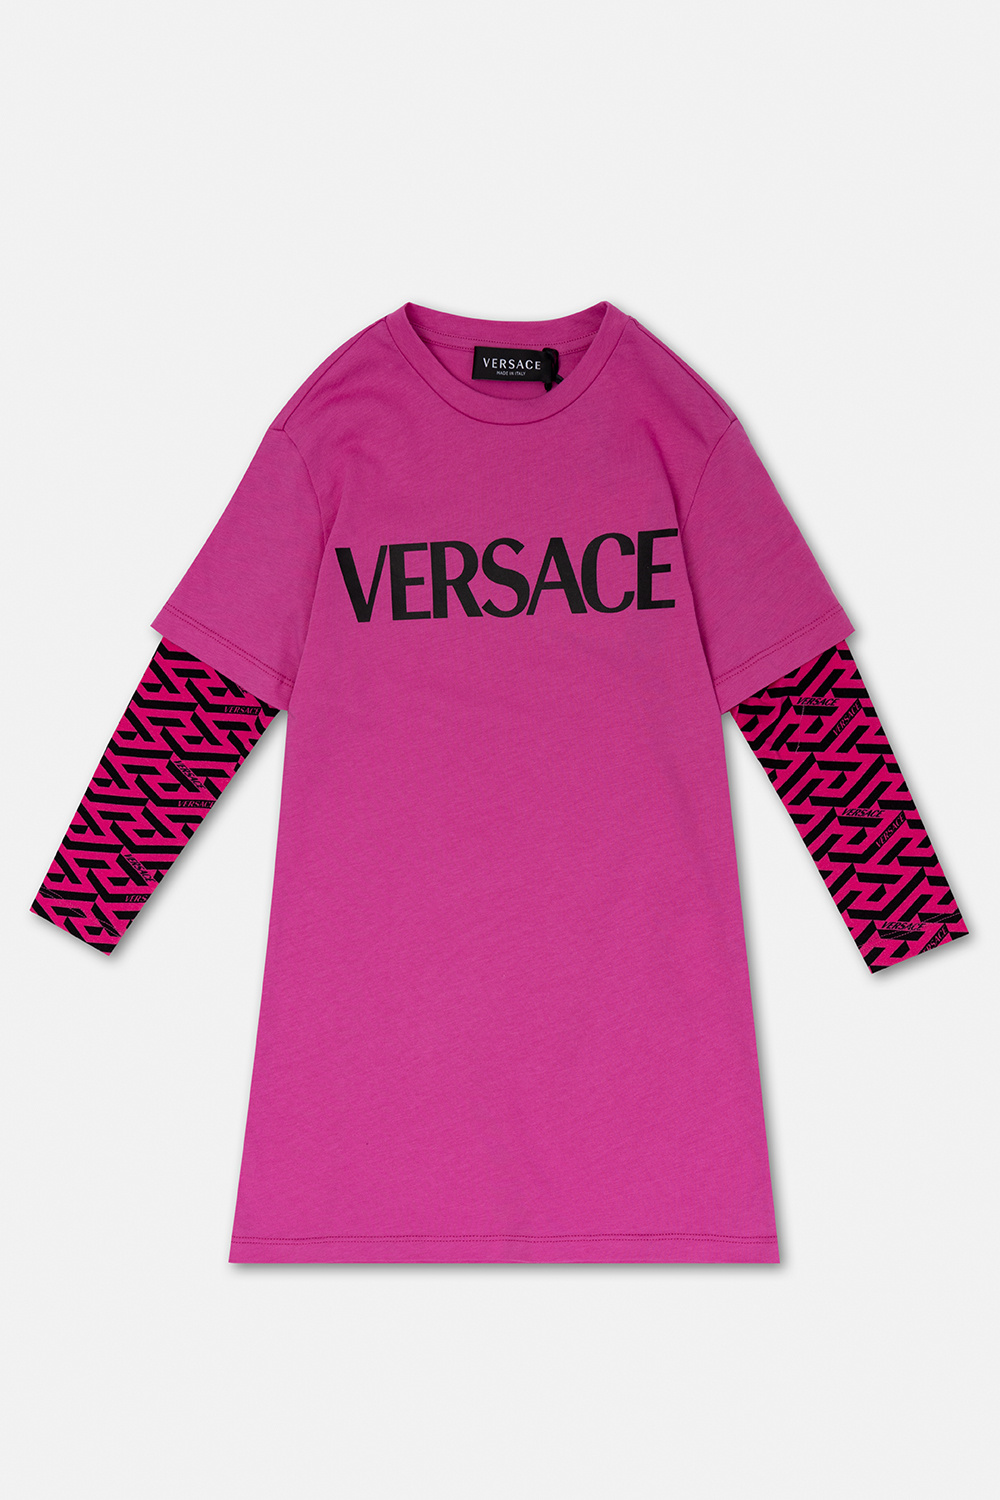 Versace - Teen Girls Pink Greca Leggings